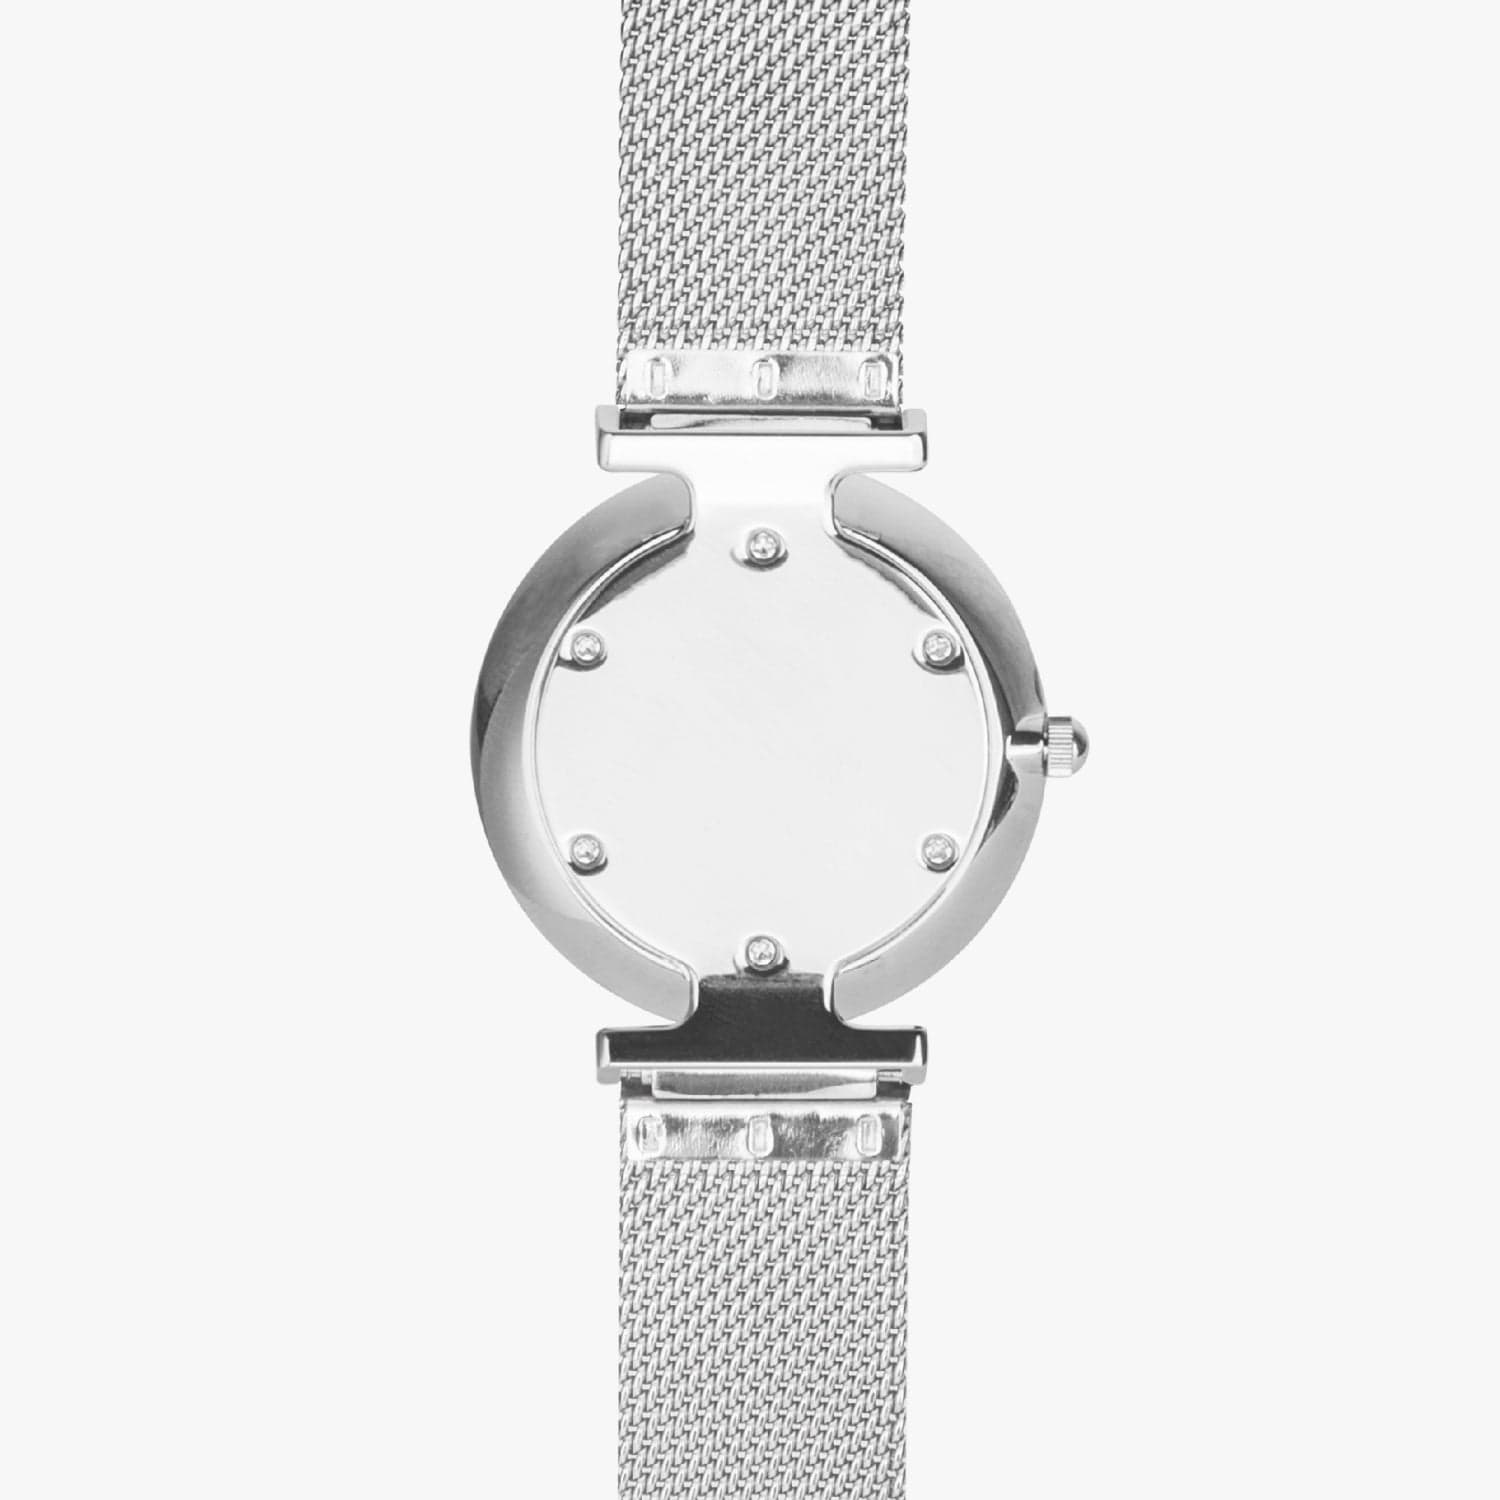 Shy white rose. New Stylish Ultra-Thin Quartz Watch, by Sensus Studio Design